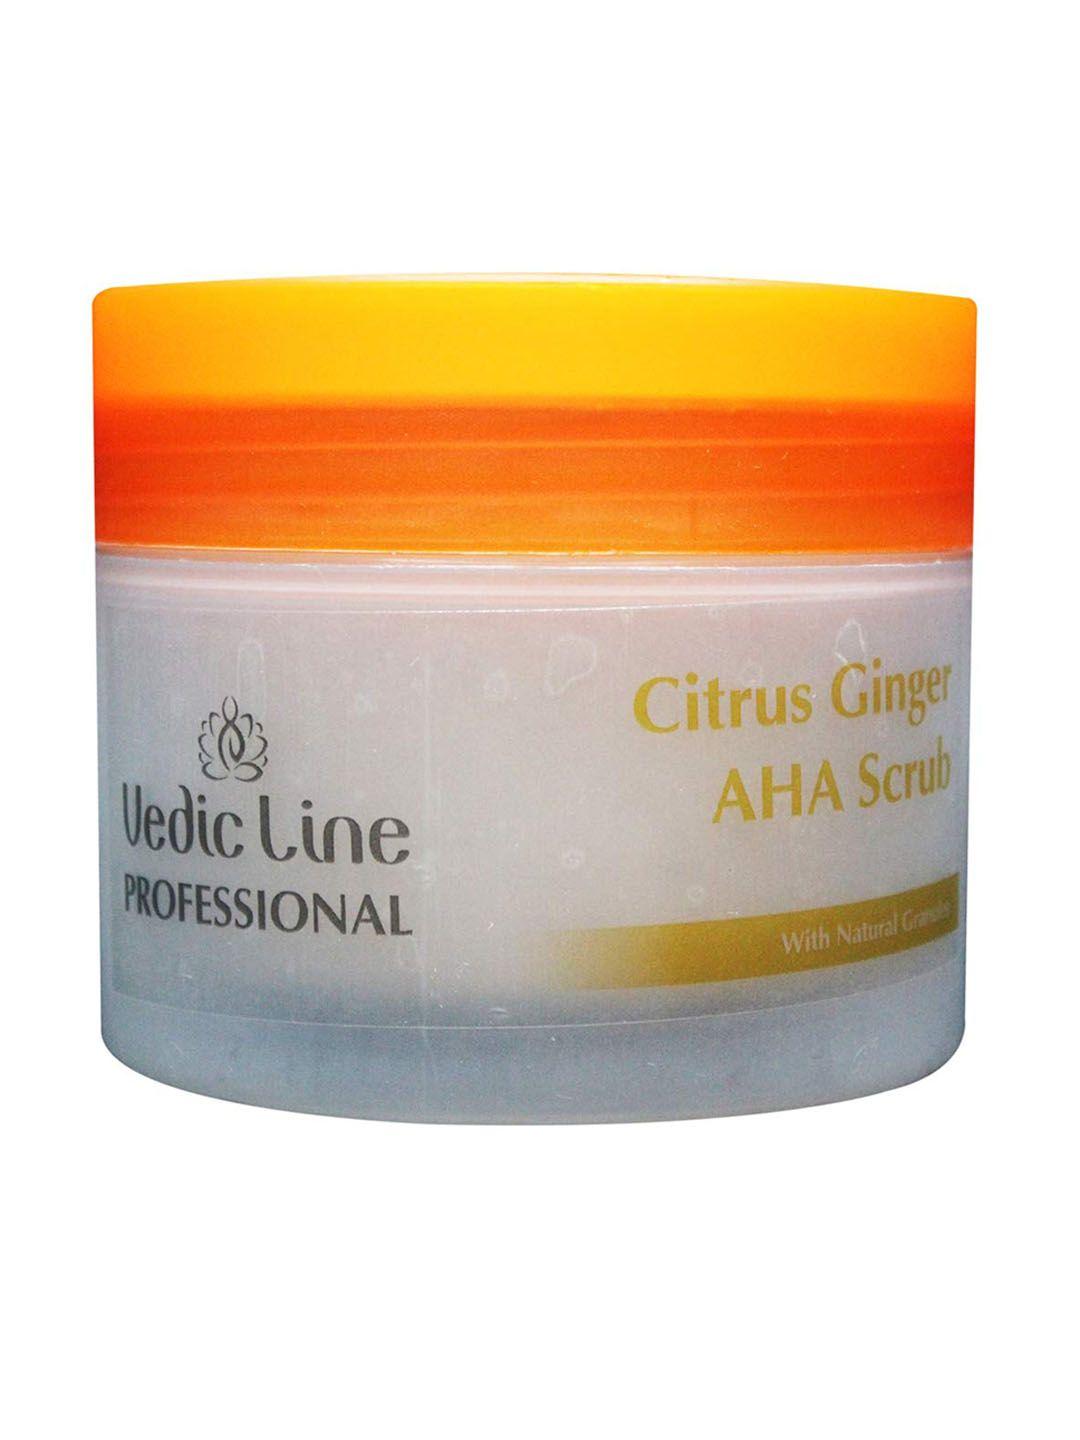 vedicline professional citrus ginger aha scrub for healthy clear skin - 500ml